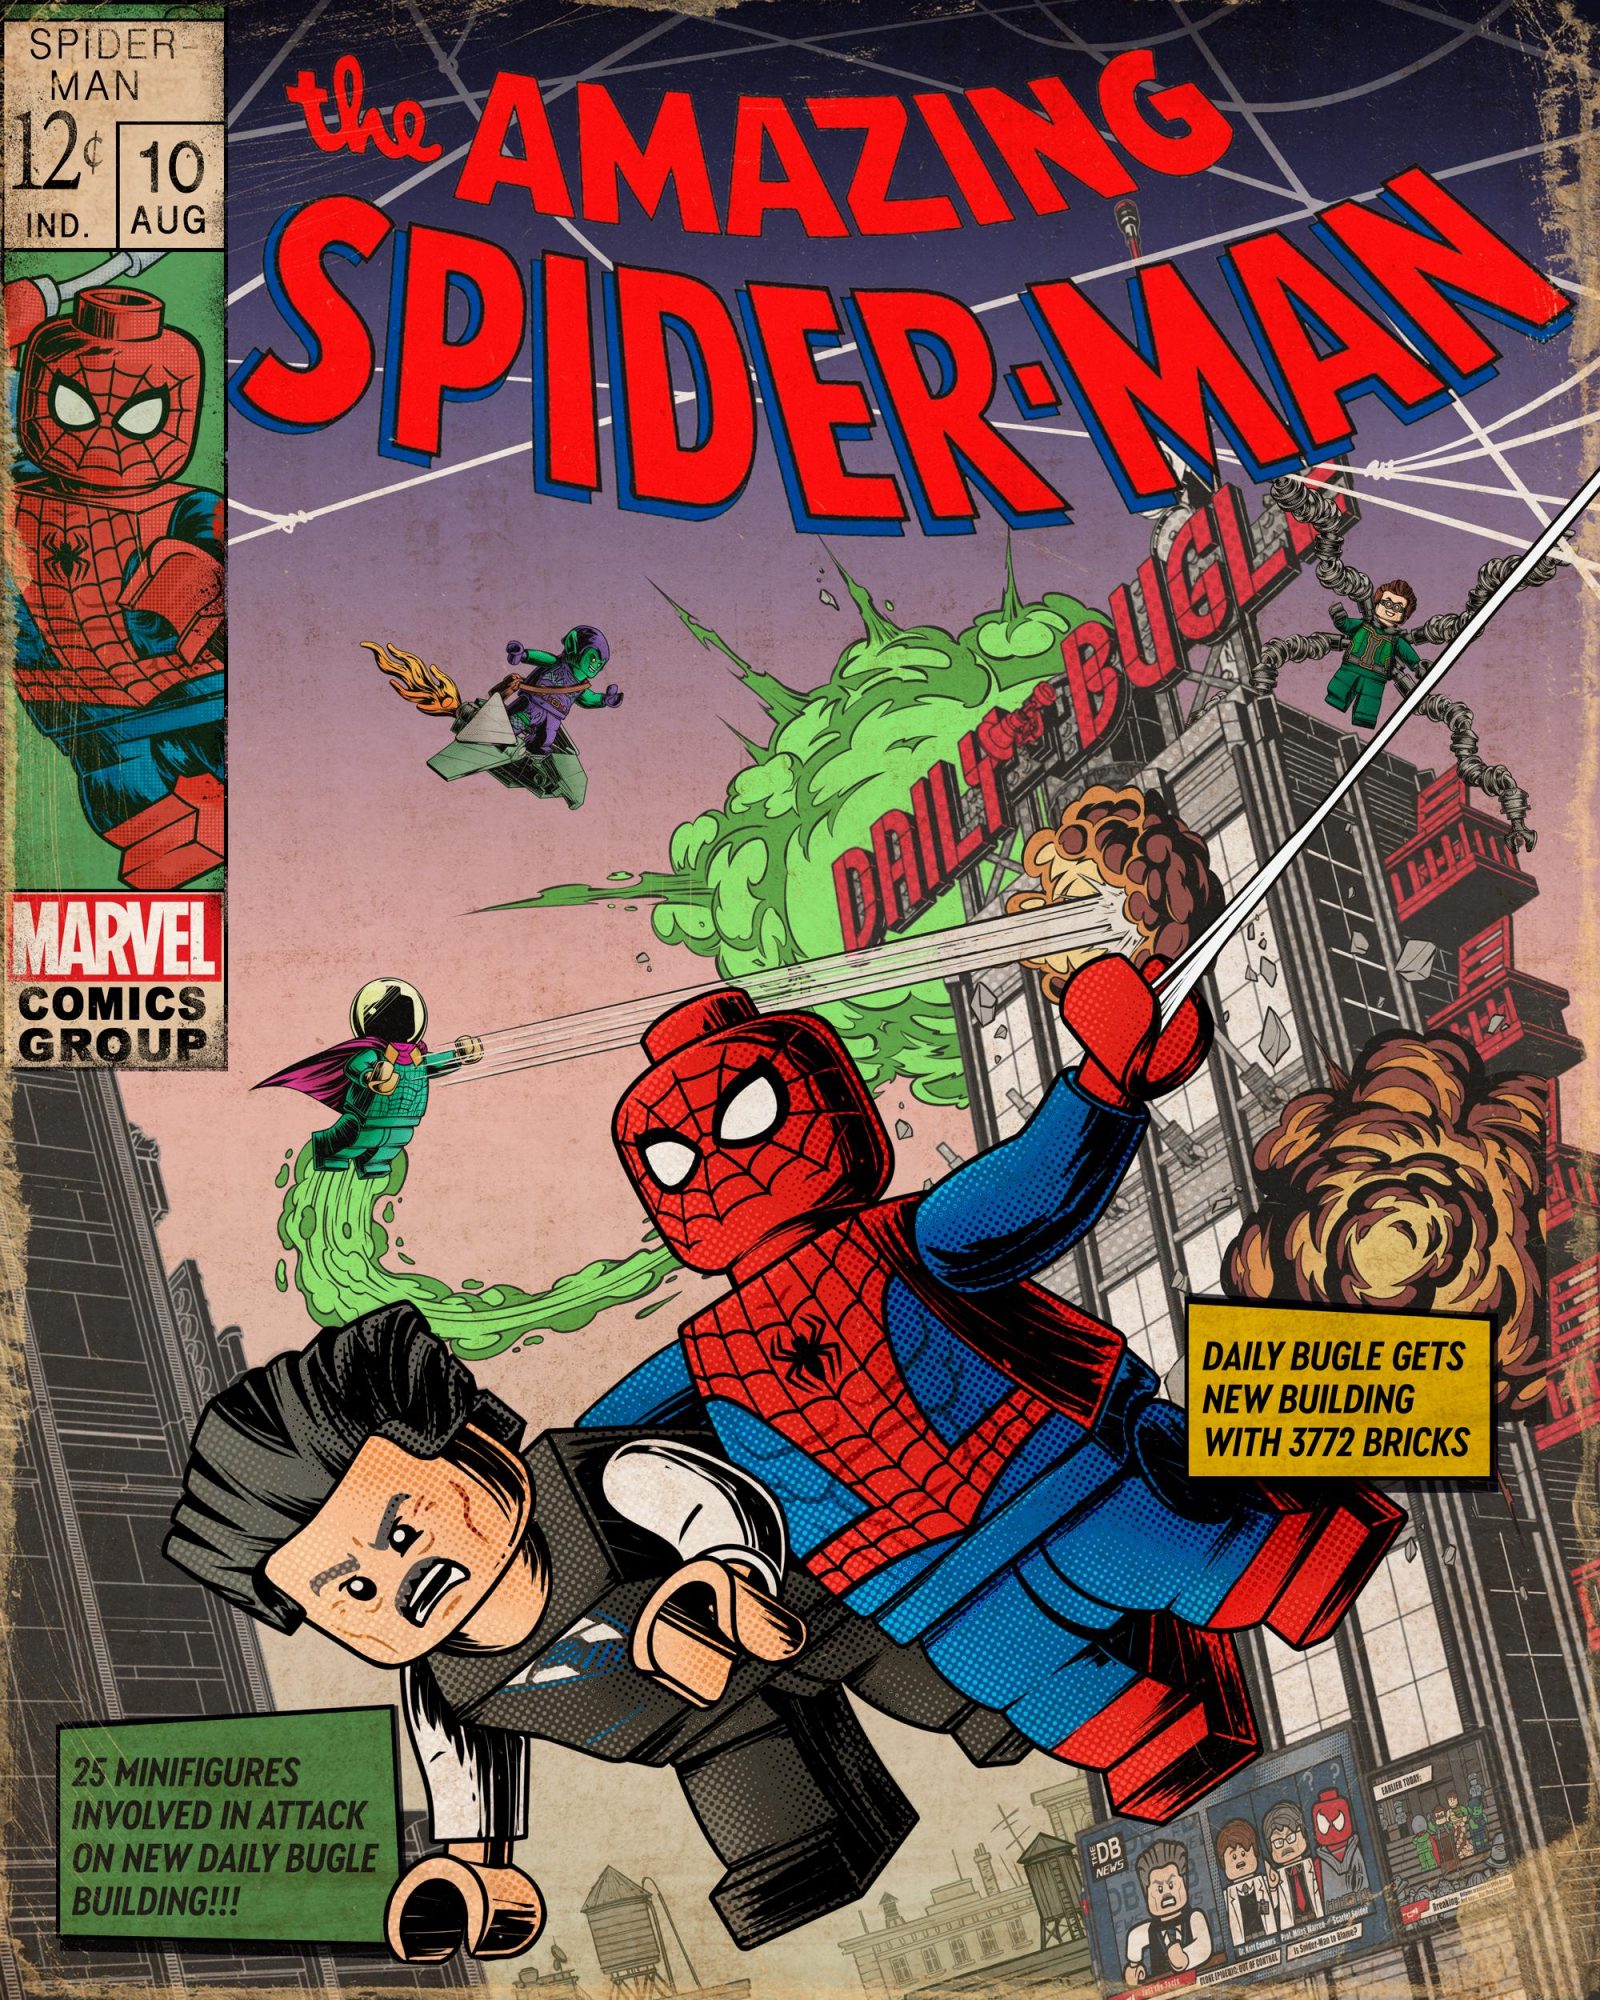 LEGO Daily Bugle (76178) The Amazing Spider-man